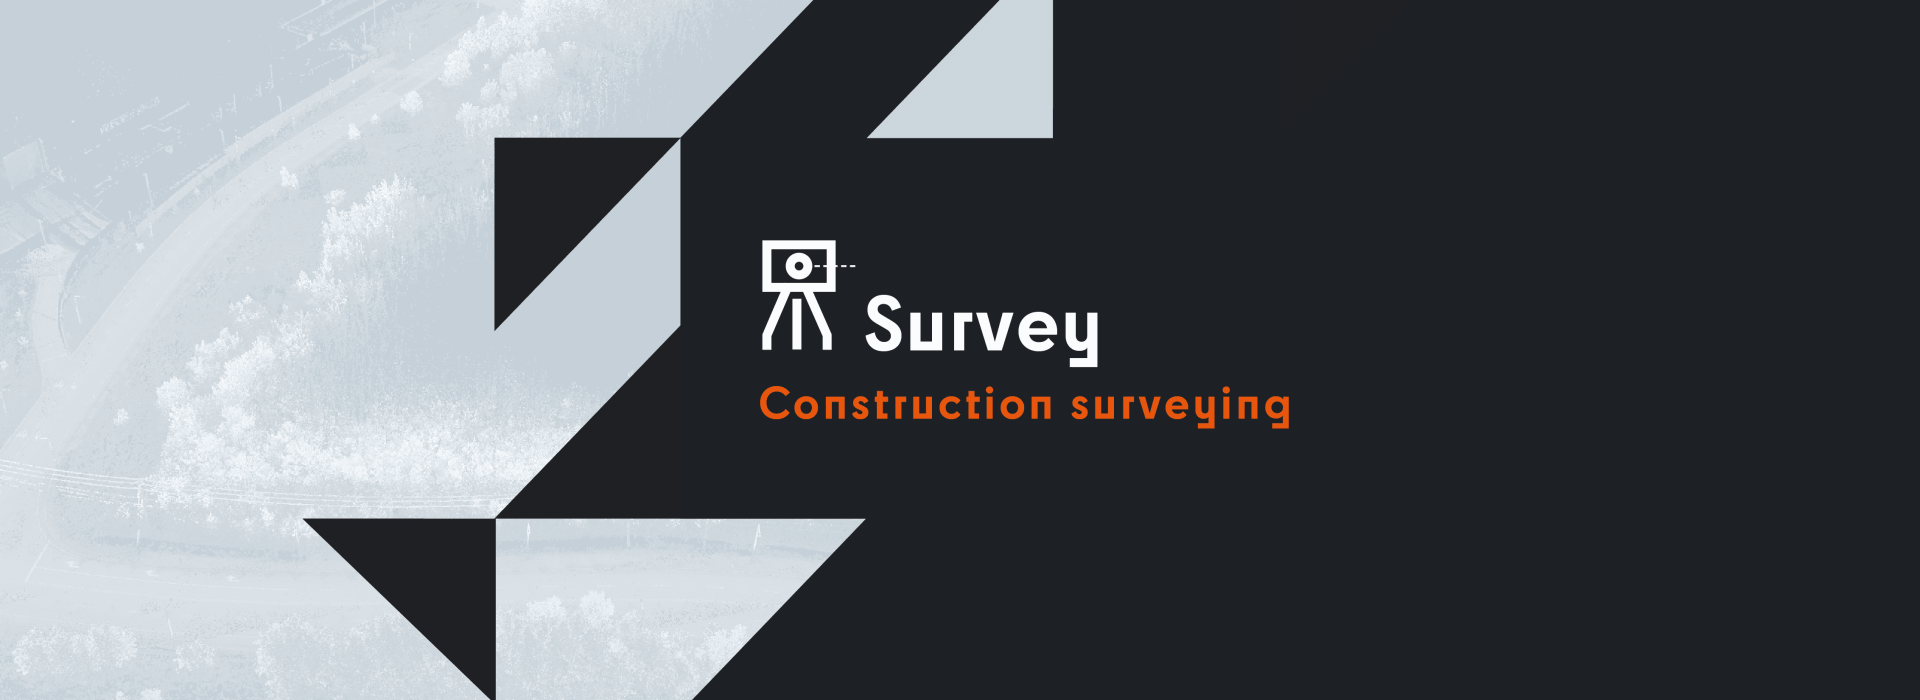 ANGLAIS_WebBanner_Survey - Construction